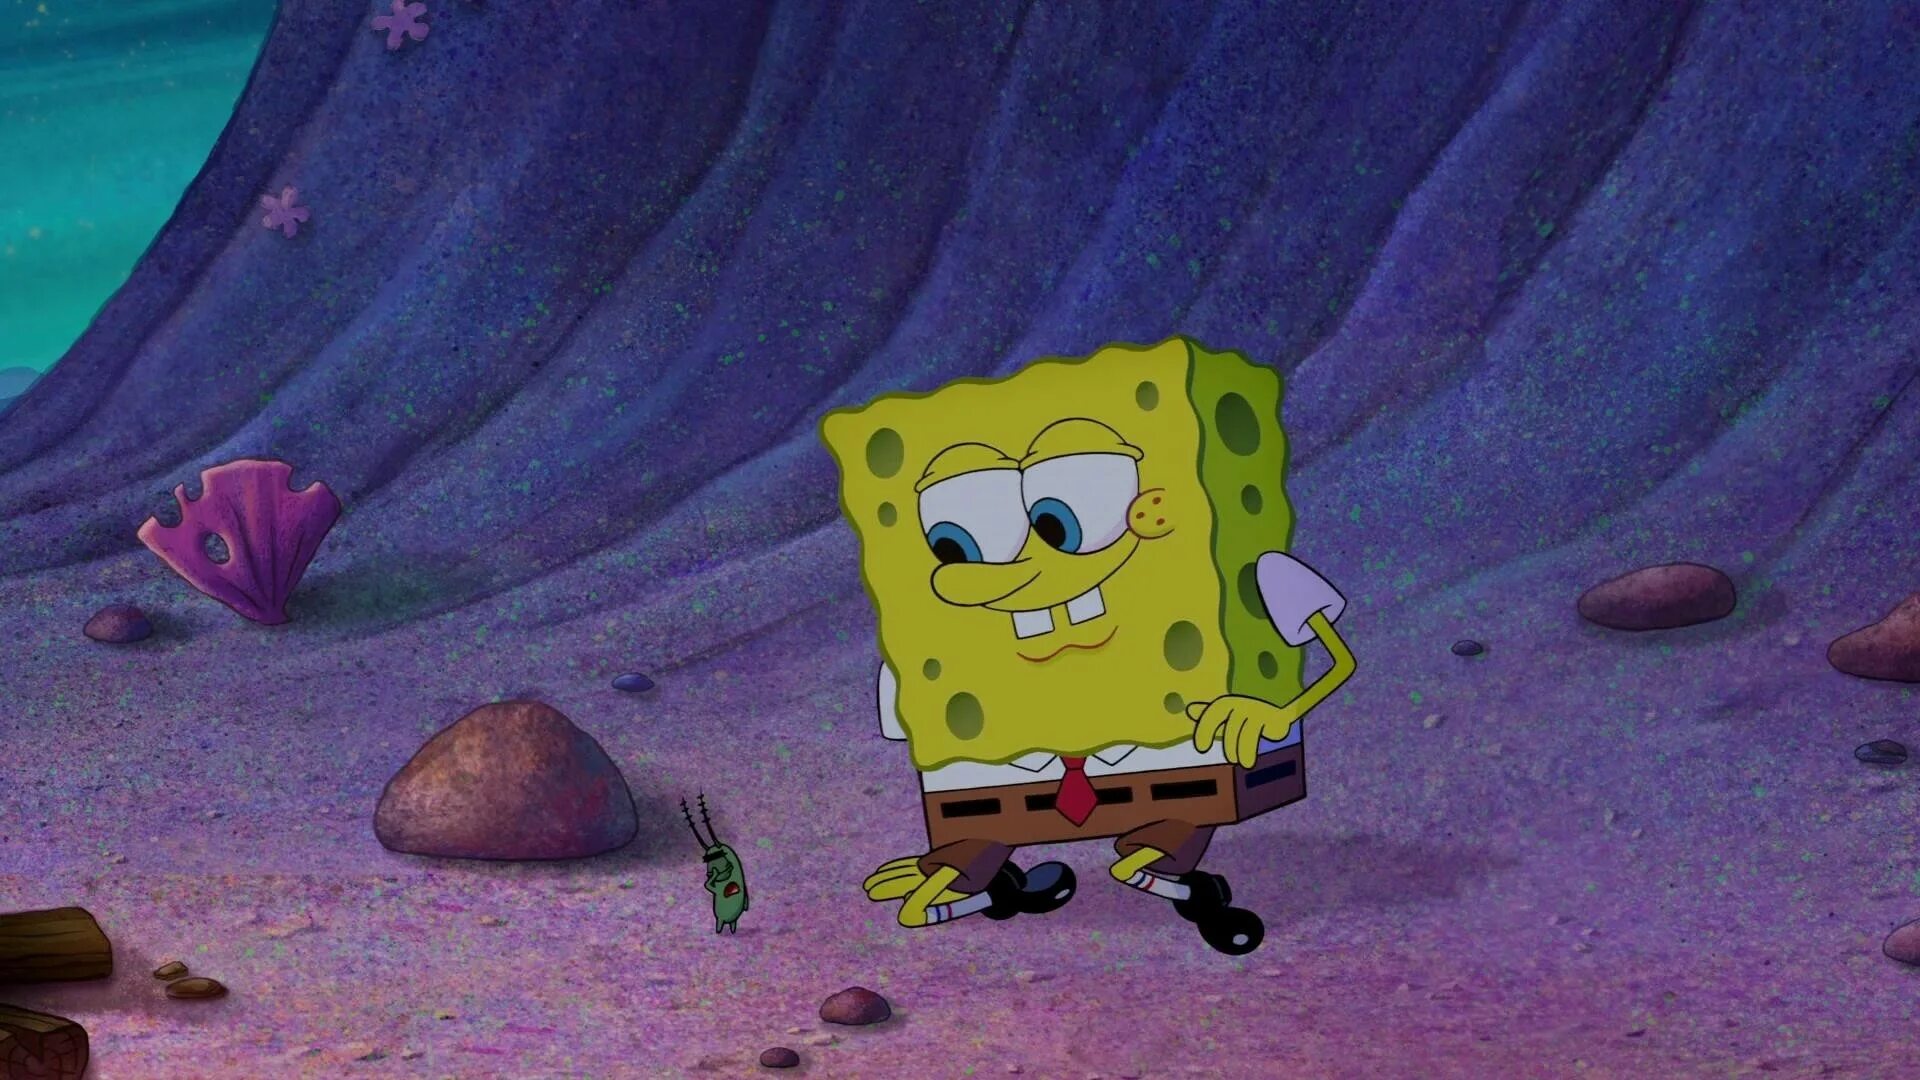 Spongebob tango. Губка Боб квадратные штаны 2004. Губка Боб Стэнли с квадратные штаны. Губка Боб квадратные штаны Патрик. Губка Боб квадратные штаны Эстетика.